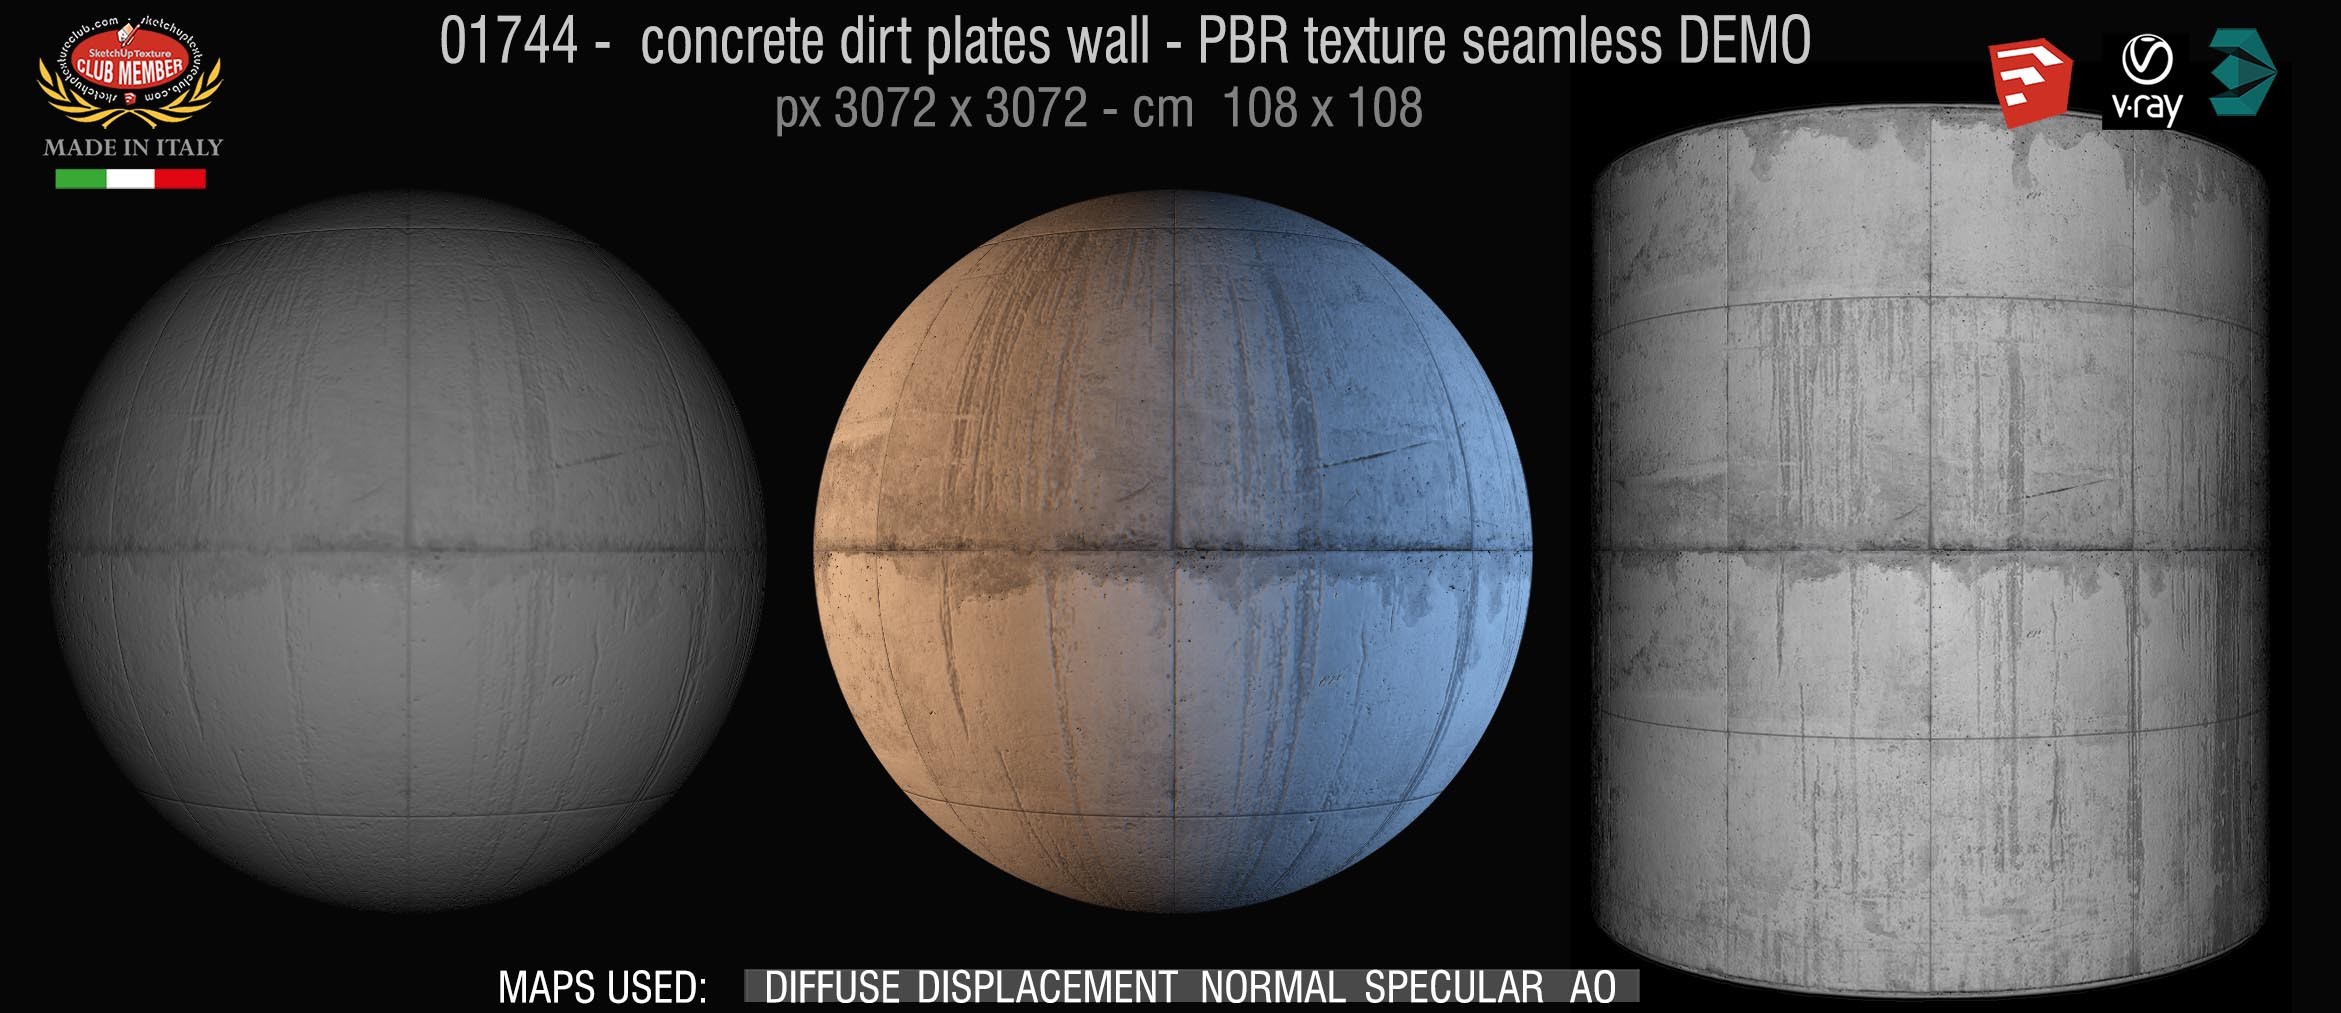 01744 concrete dirt plates wall PBR texture seamless DEMO